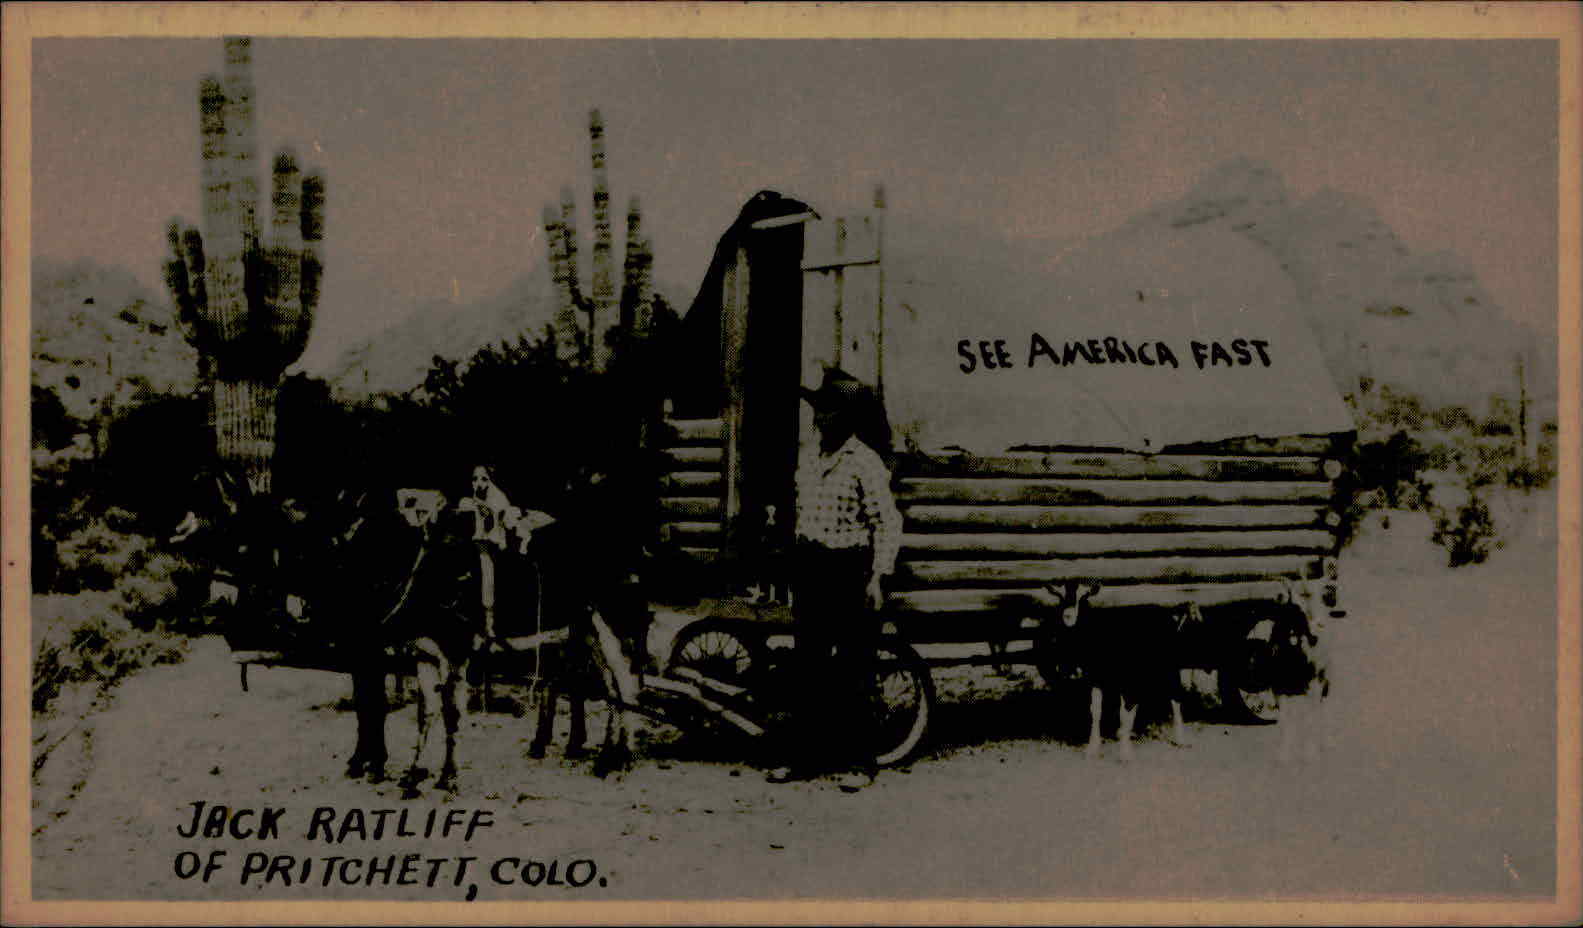 Postcard: JACK RATLIFF OF PRITCHETT, COLO. SEE AMERICA FAST